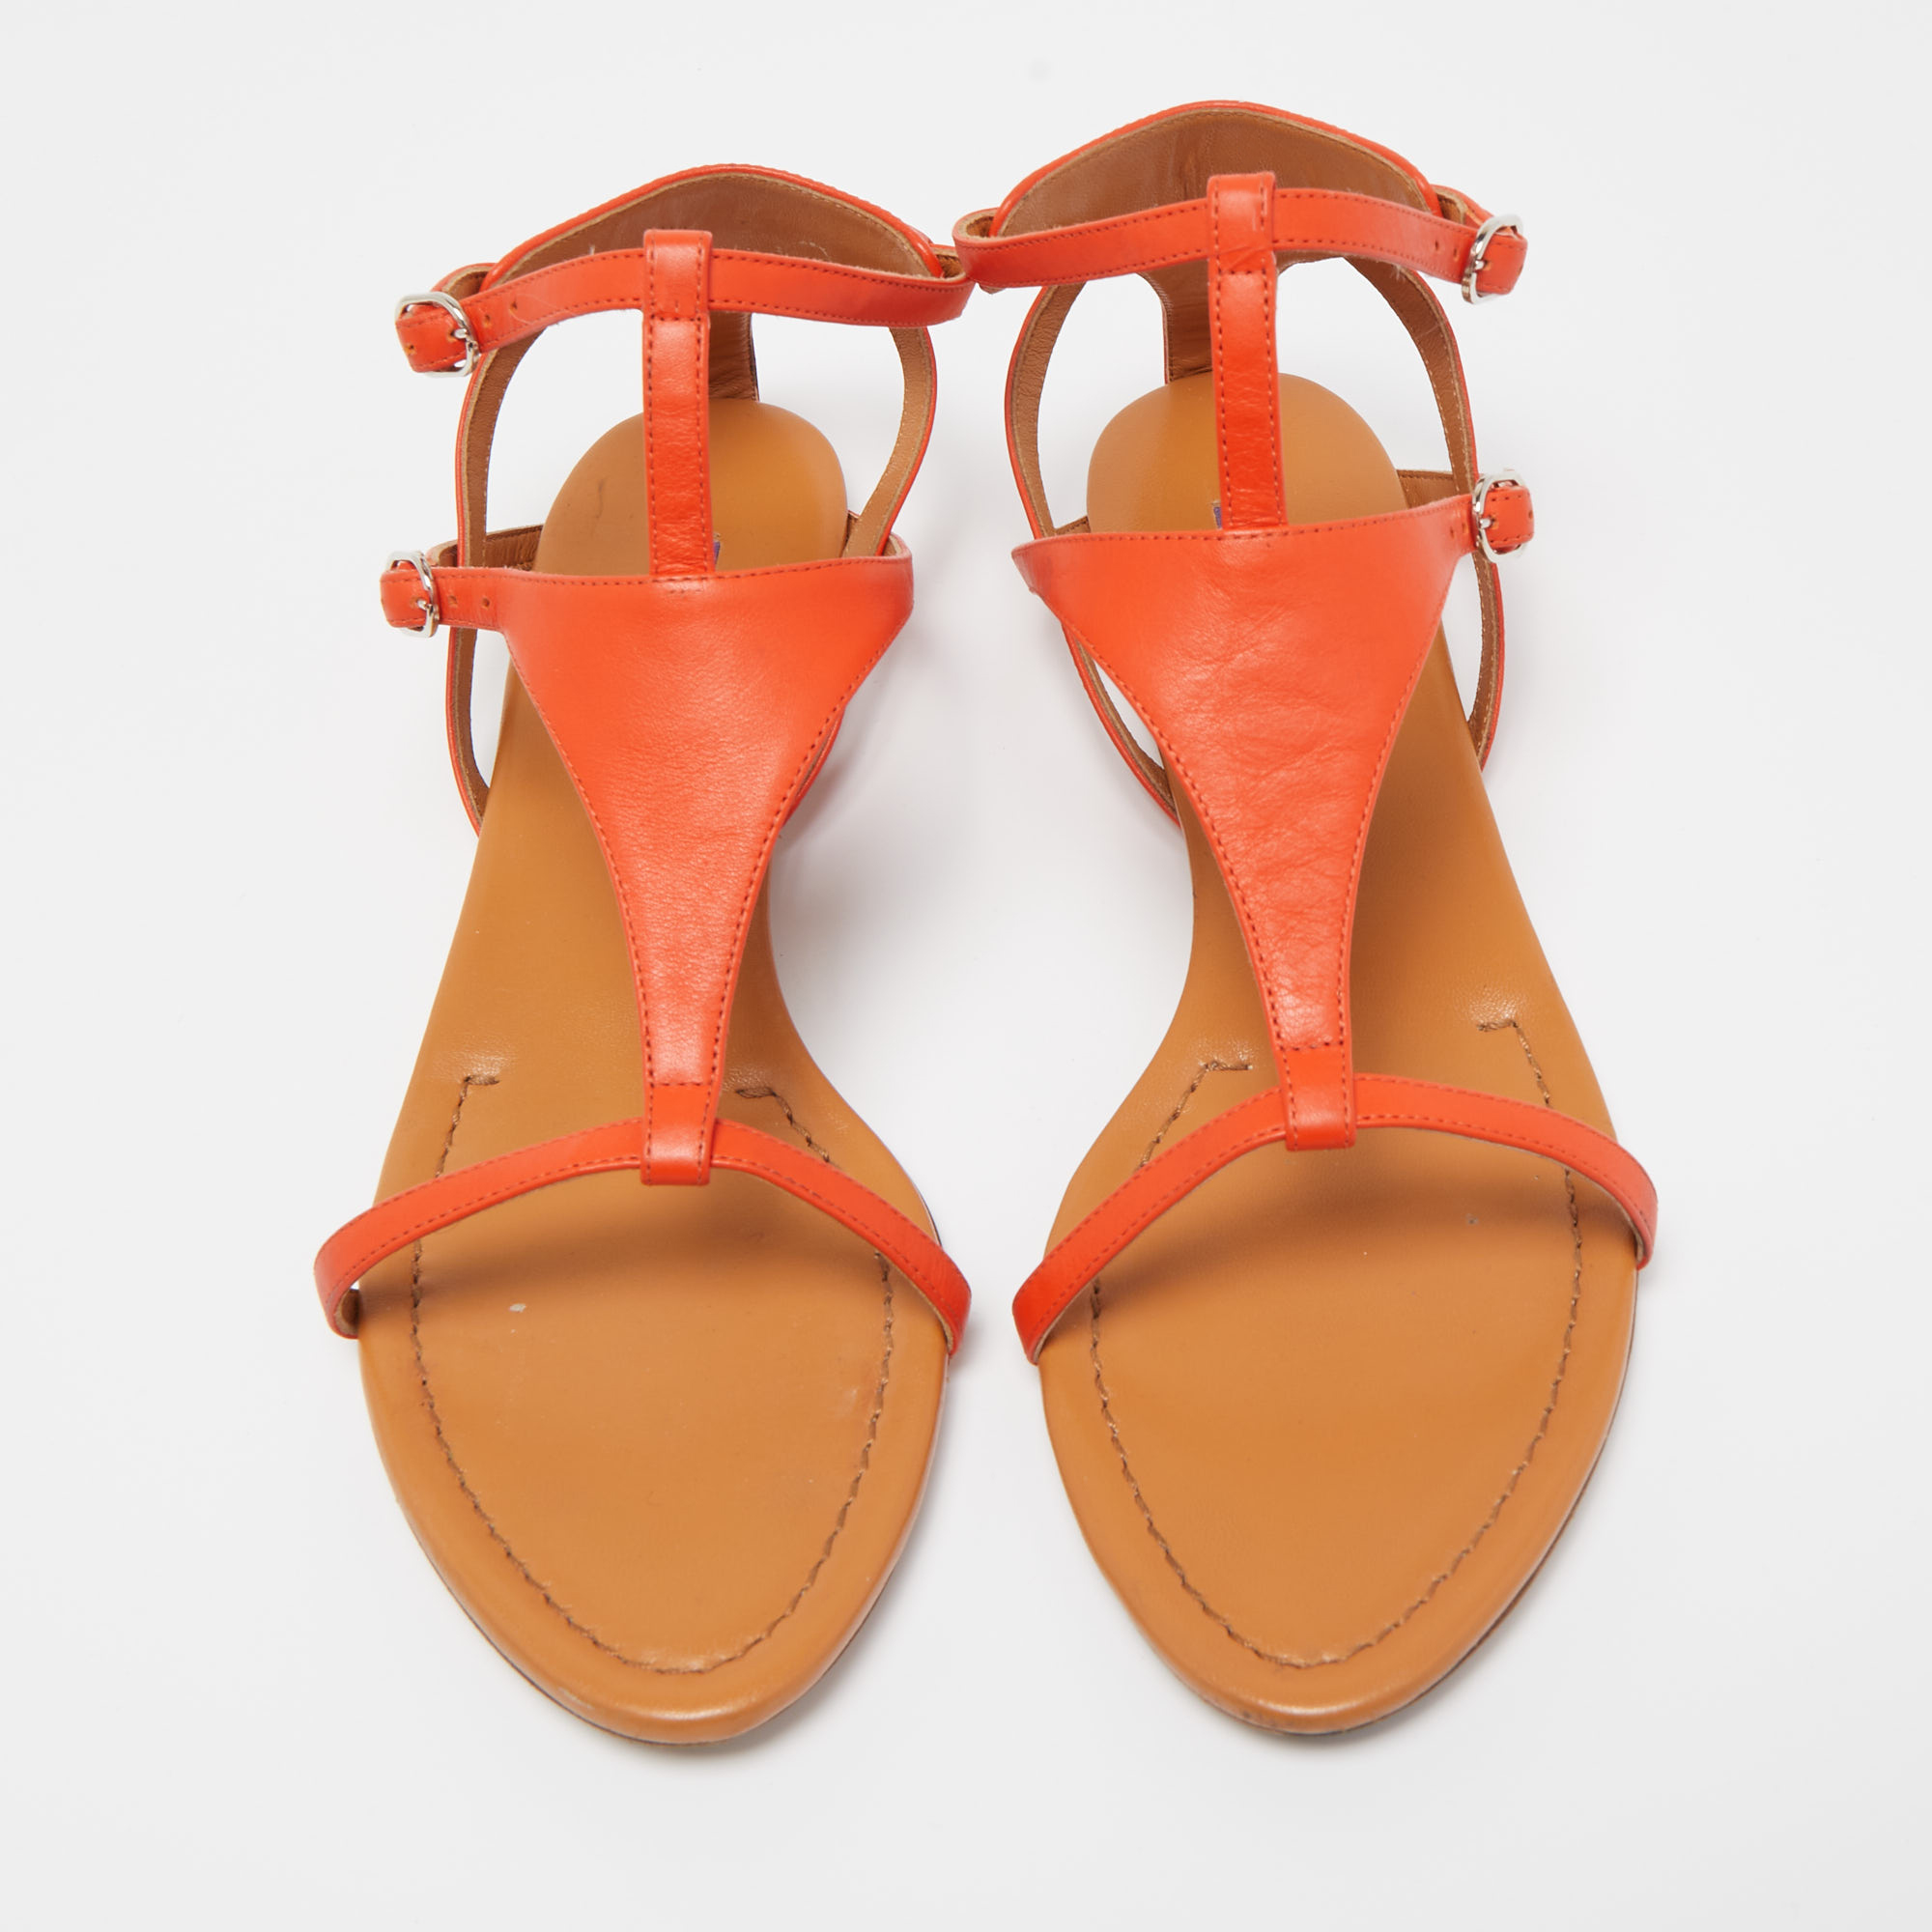 Ralph Lauren Orange Leather Flat Sandals Size 39